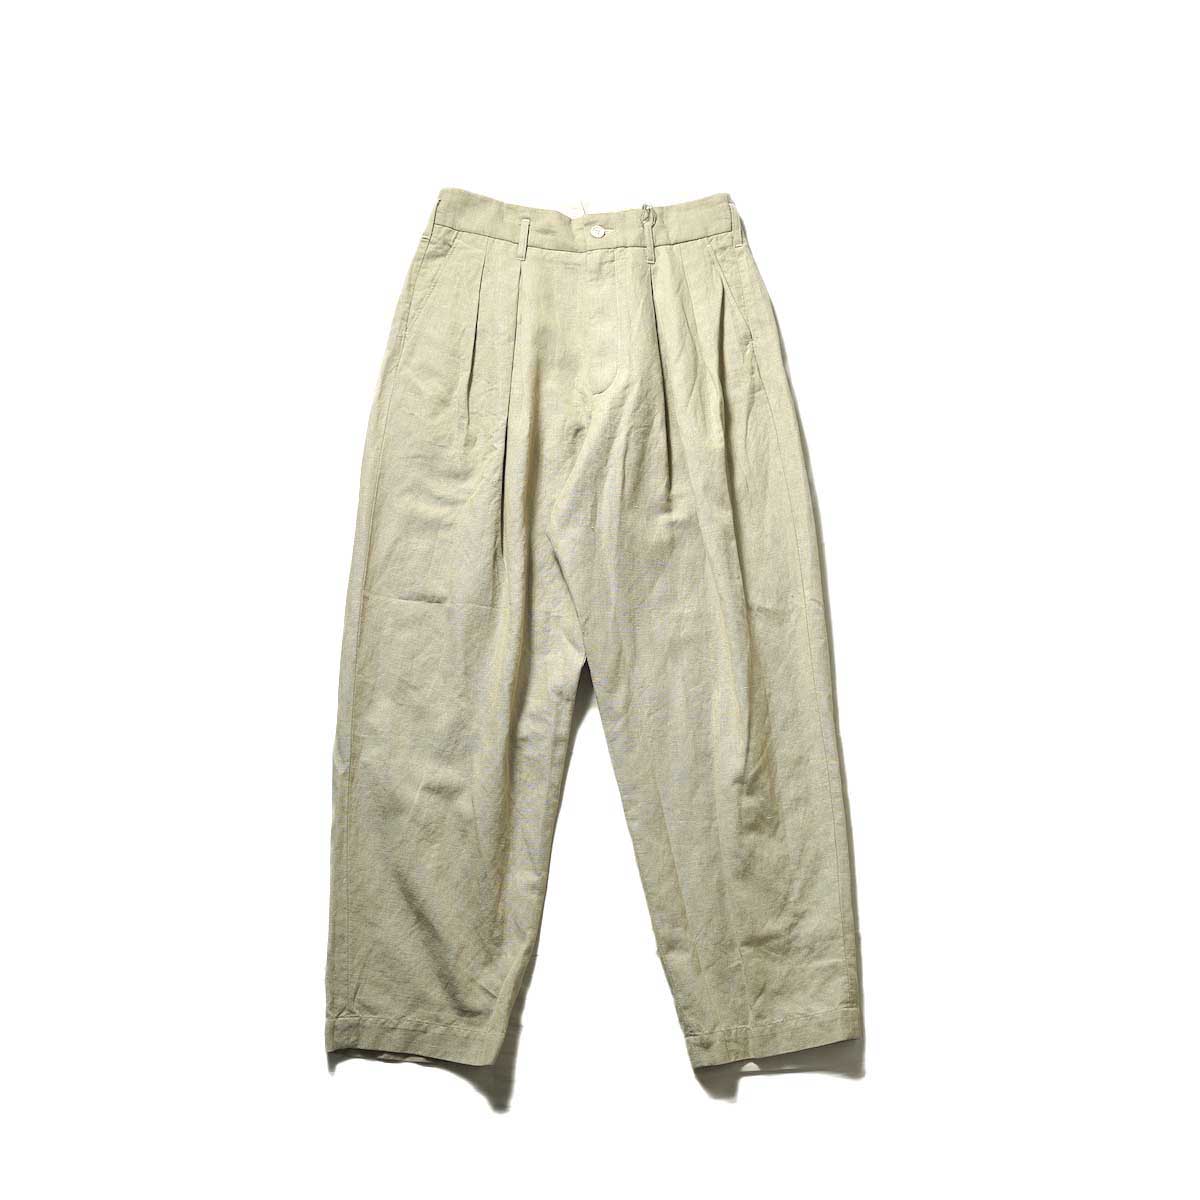 Engineered Garments / BONTAN PANT - LINEN COTTON (Natural)